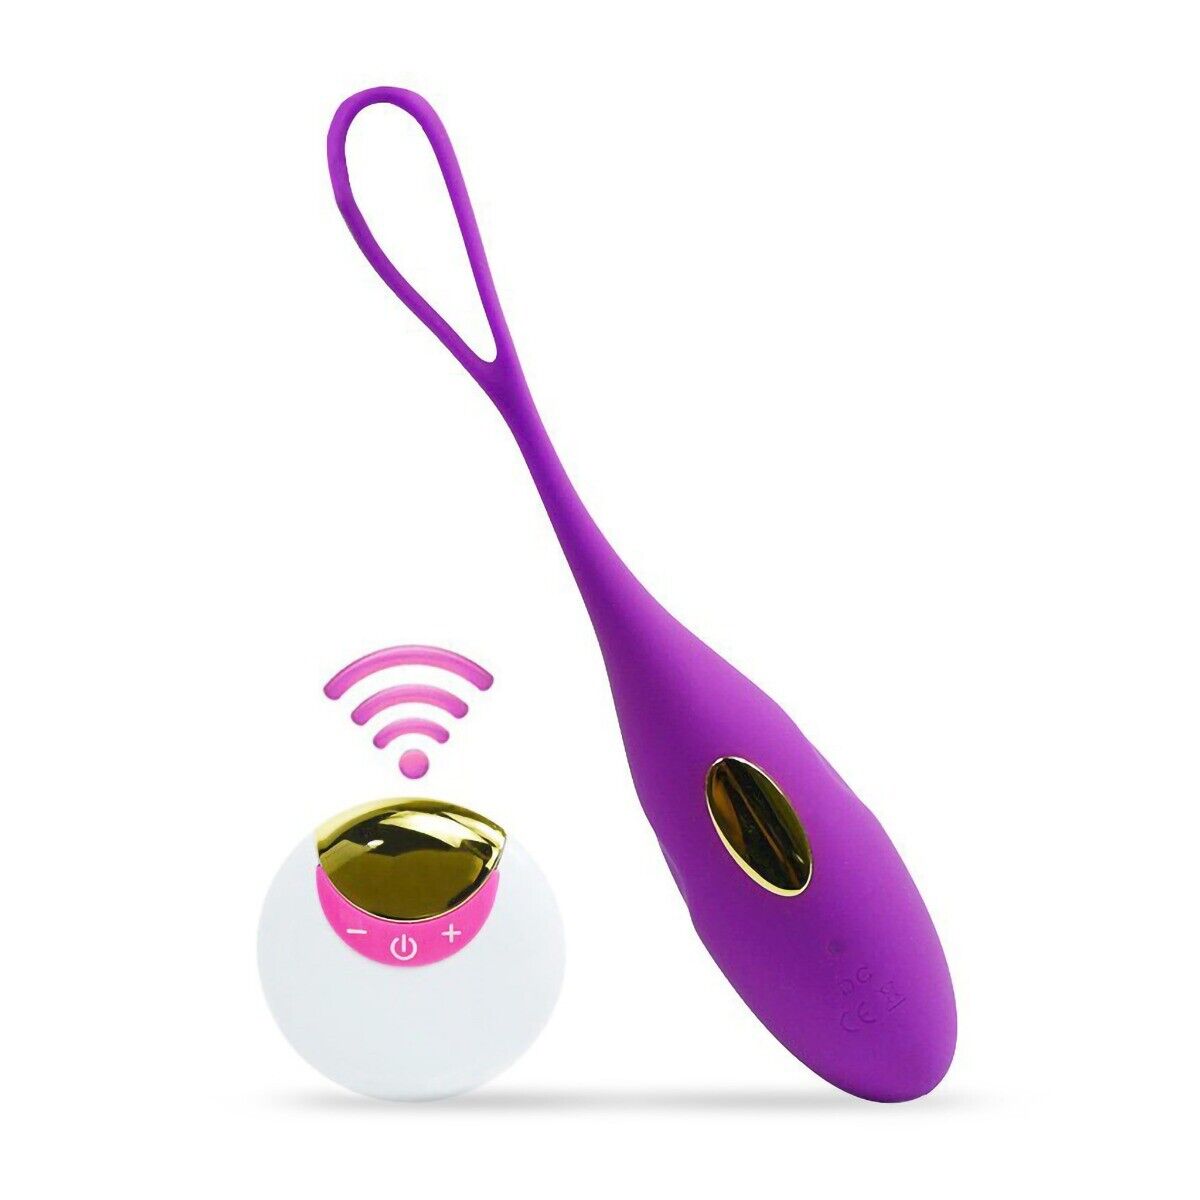 Wireless Silicone Remote Control Vibrator Egg Vaginal Kegel Exercise Ball